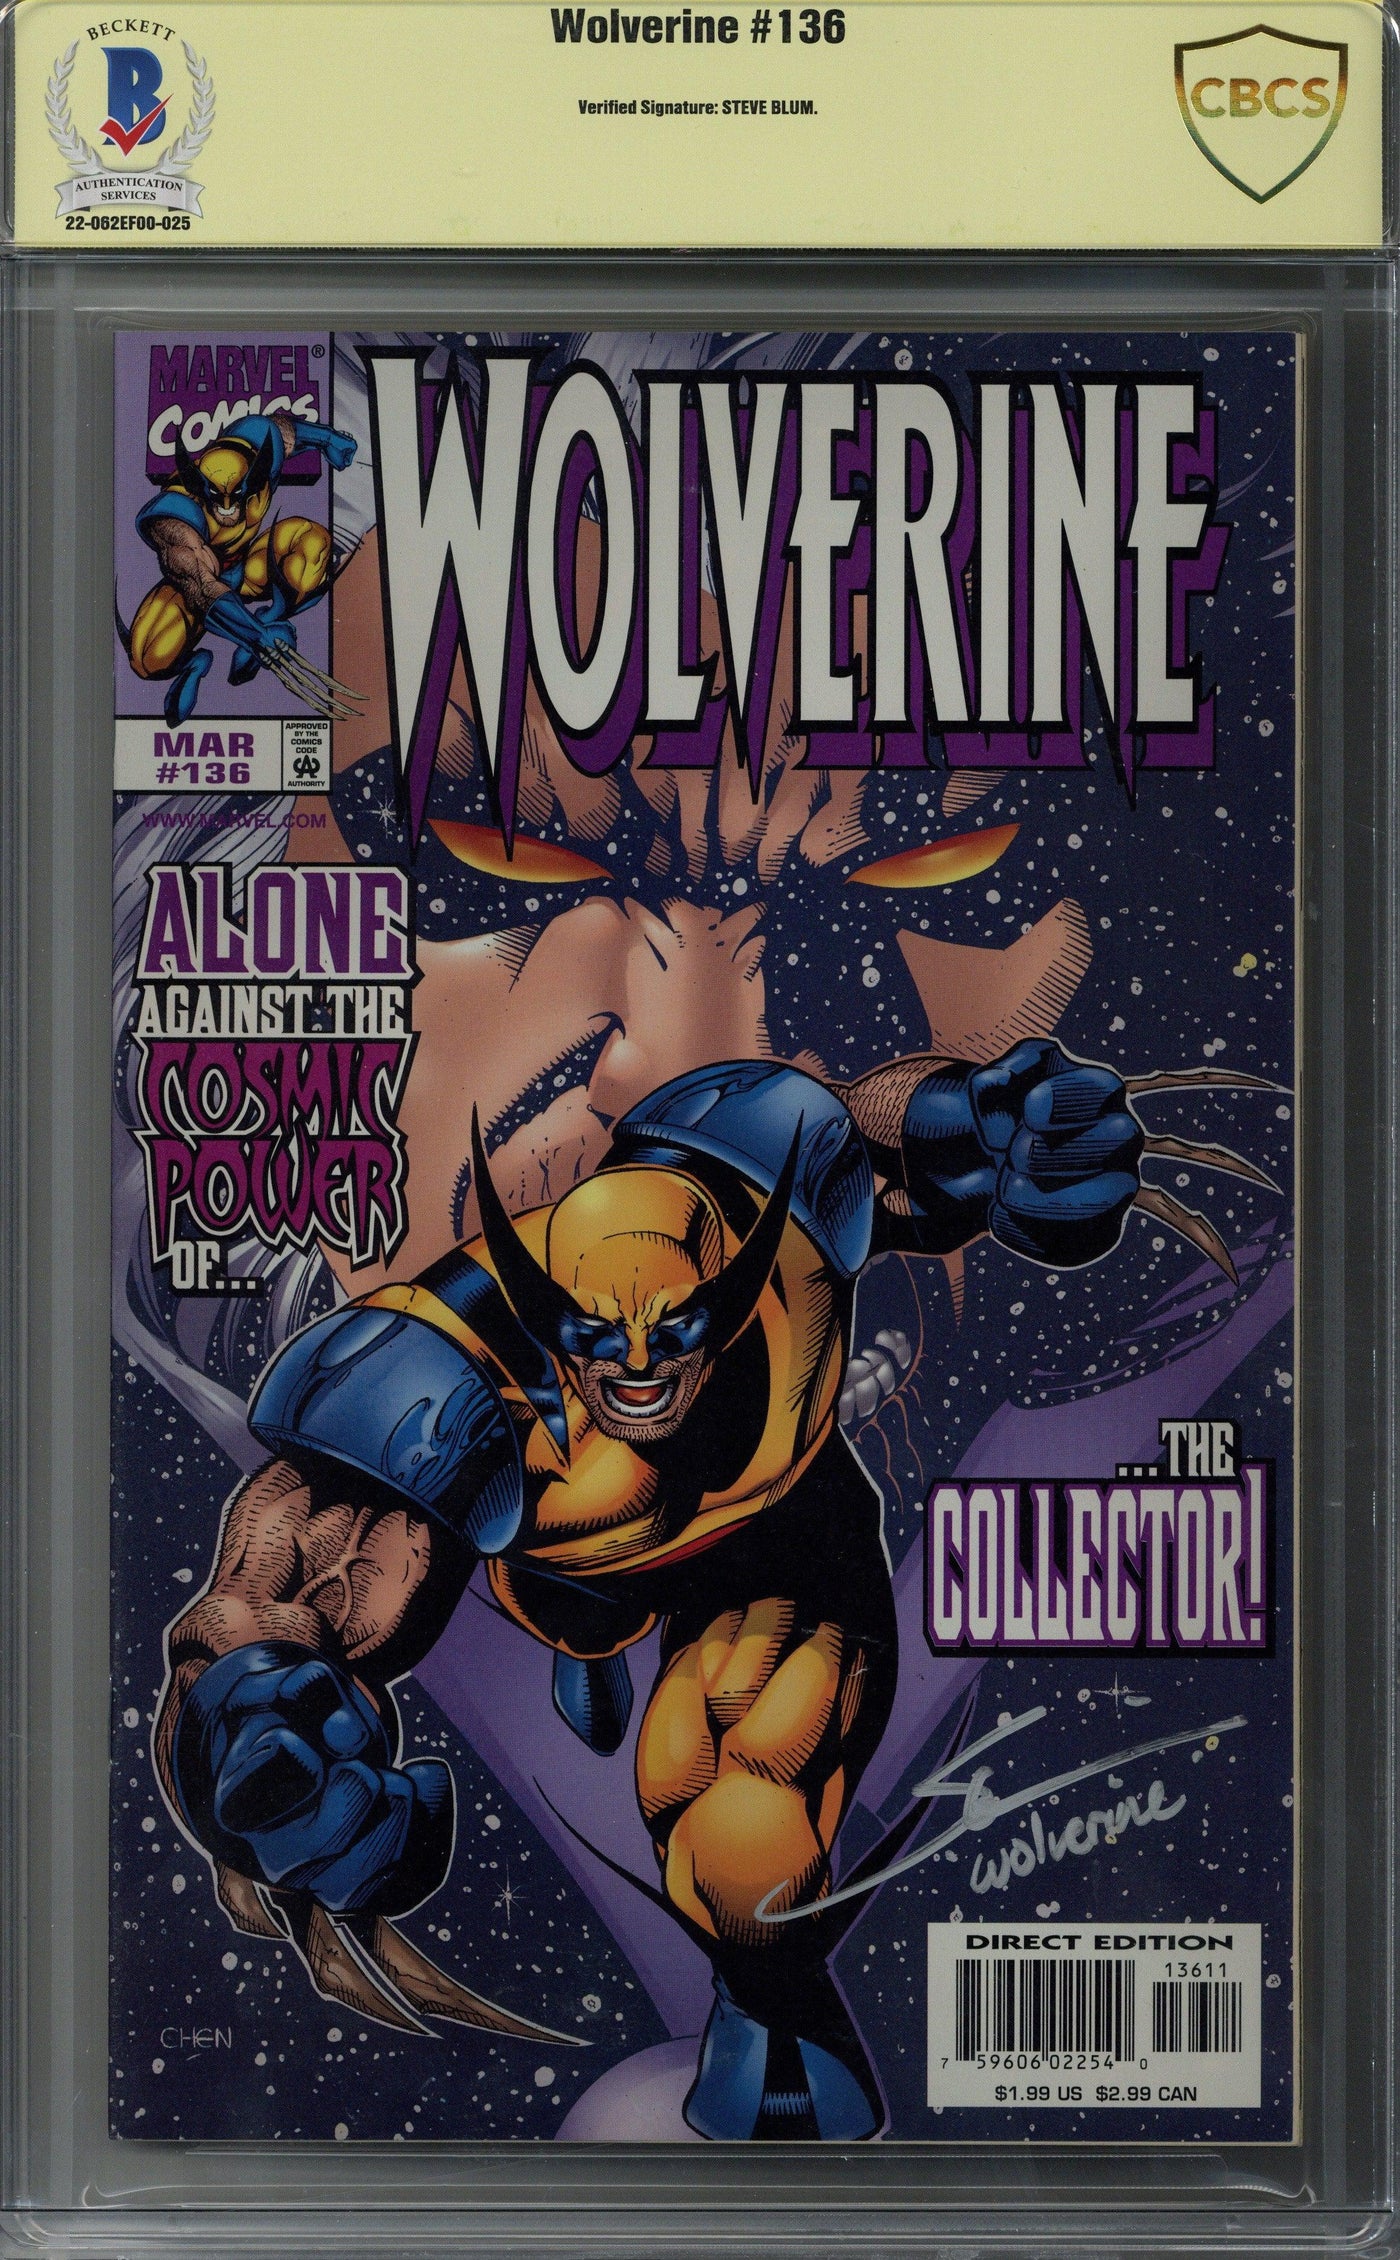 Steve Blum Signed Wolverine #136 Comic Book CBCS